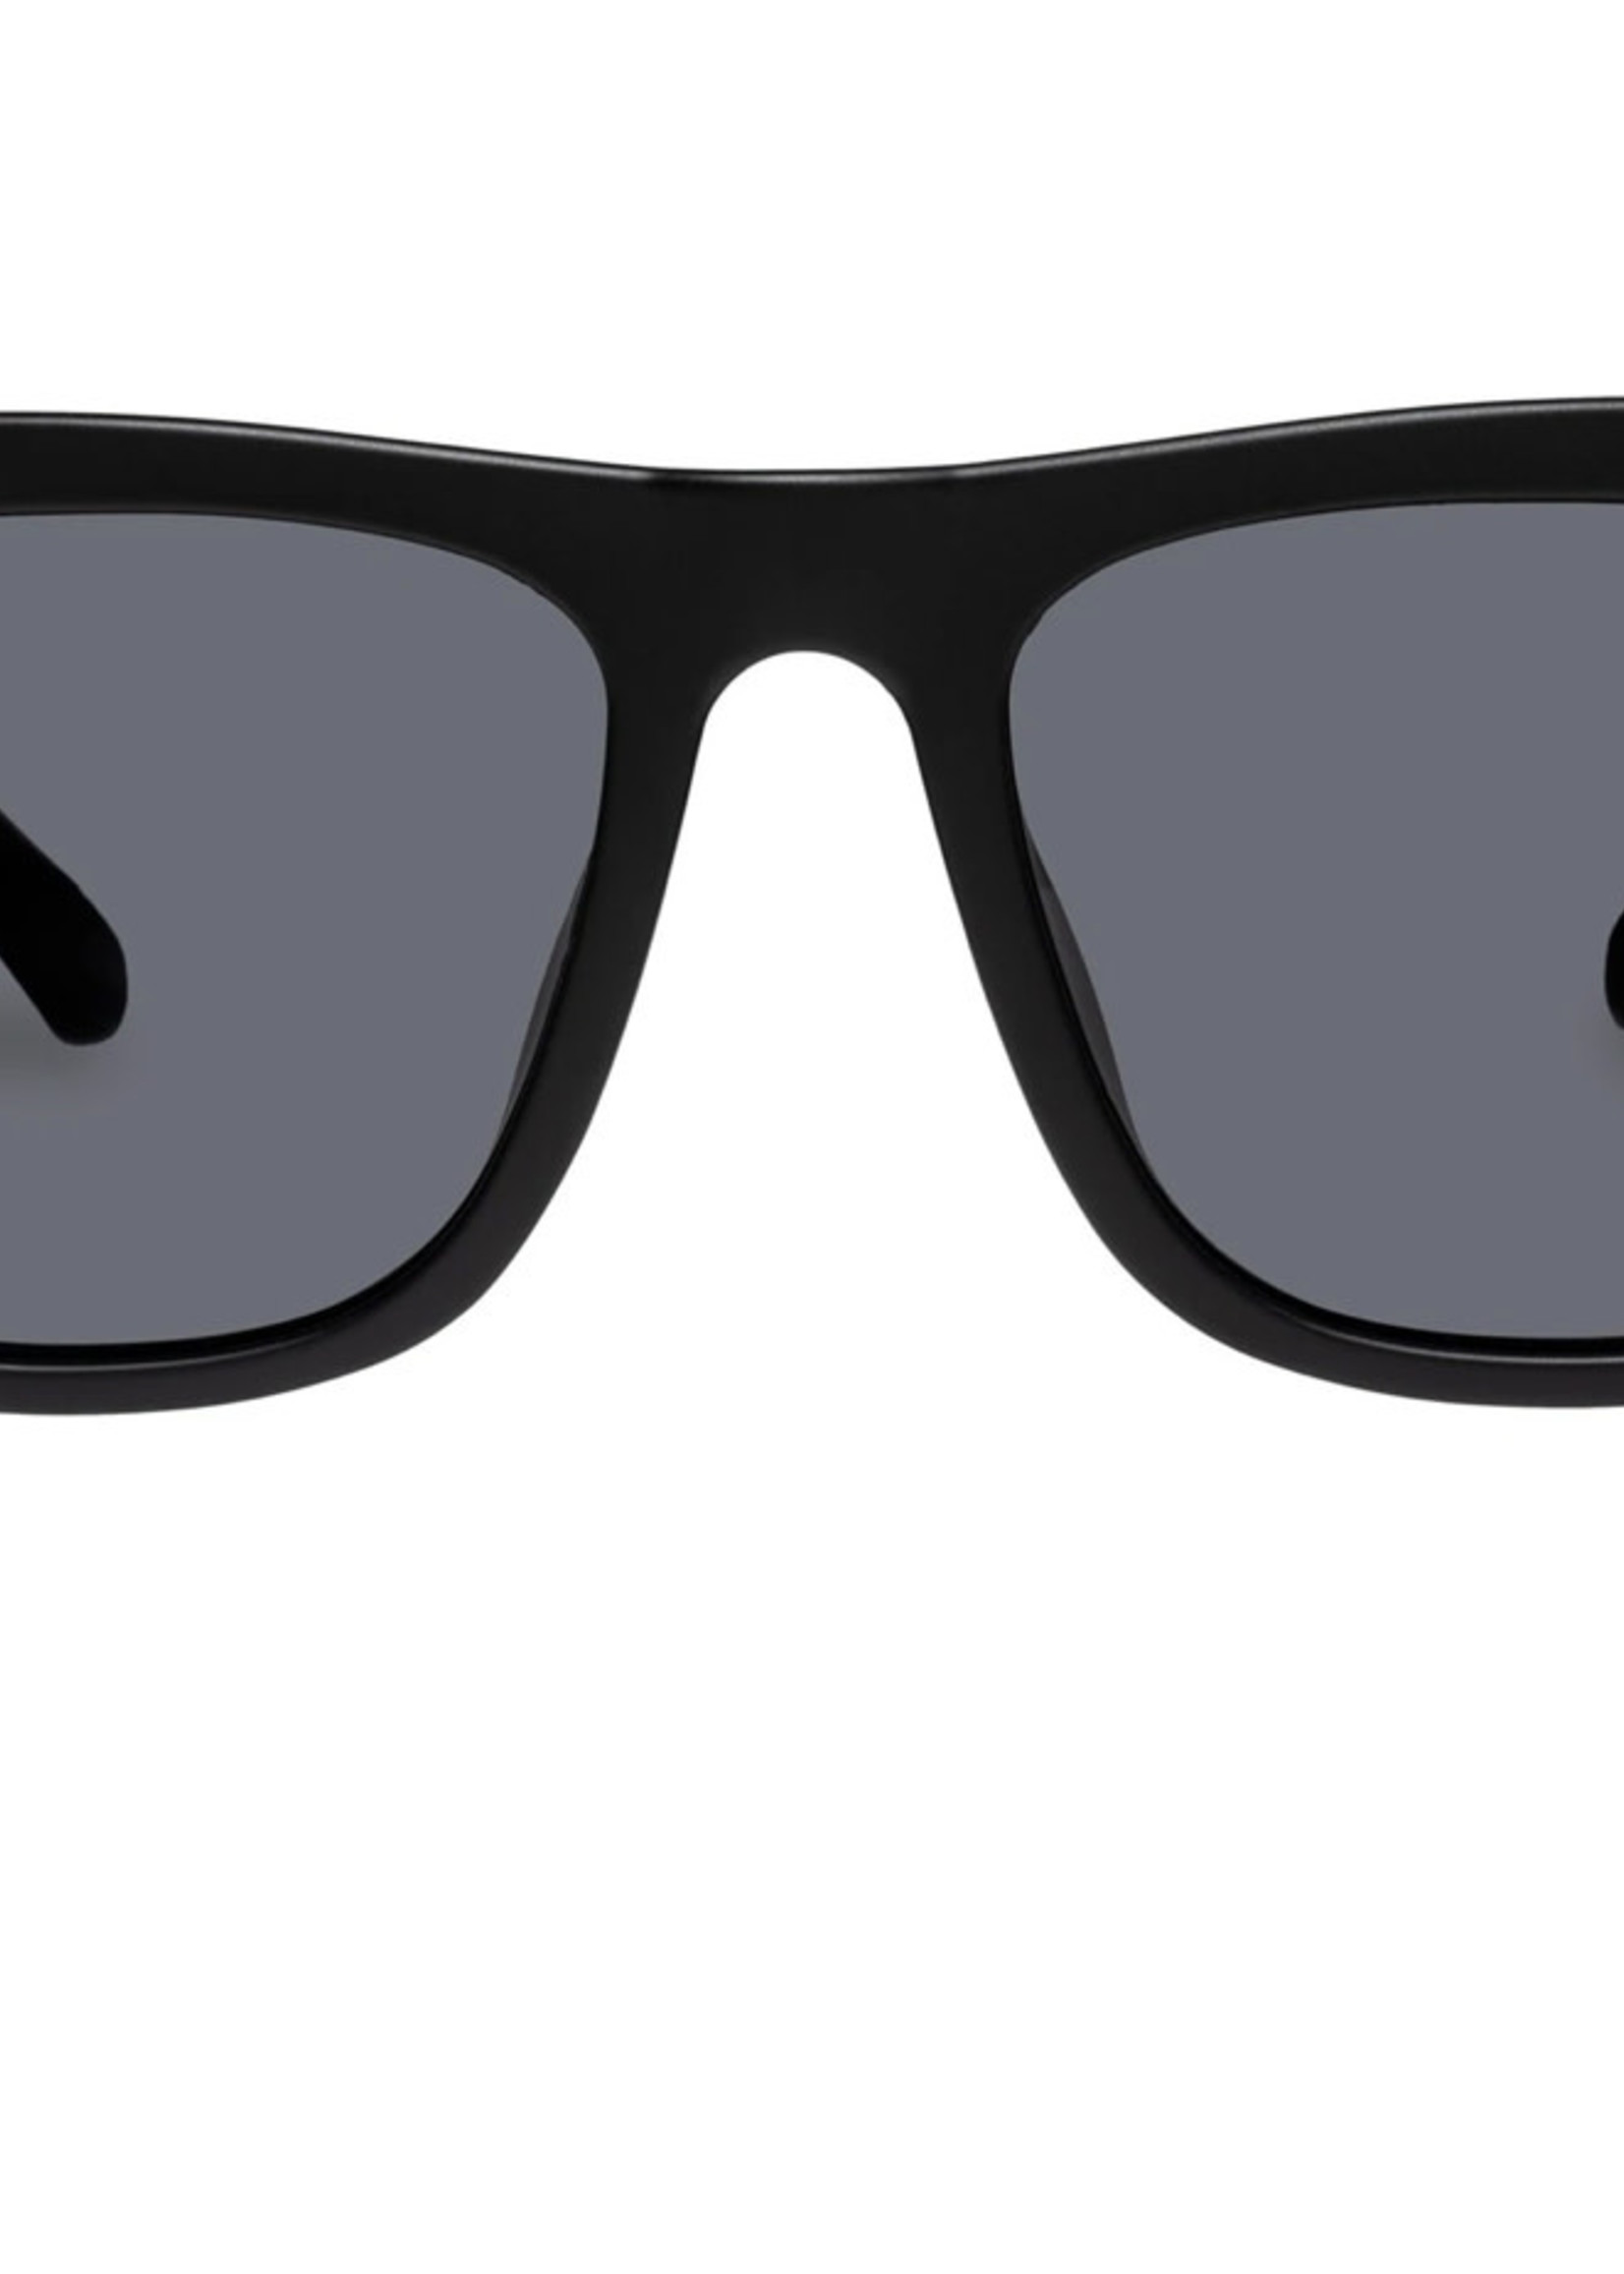 LE SPECS "Impala" Sunglasses black